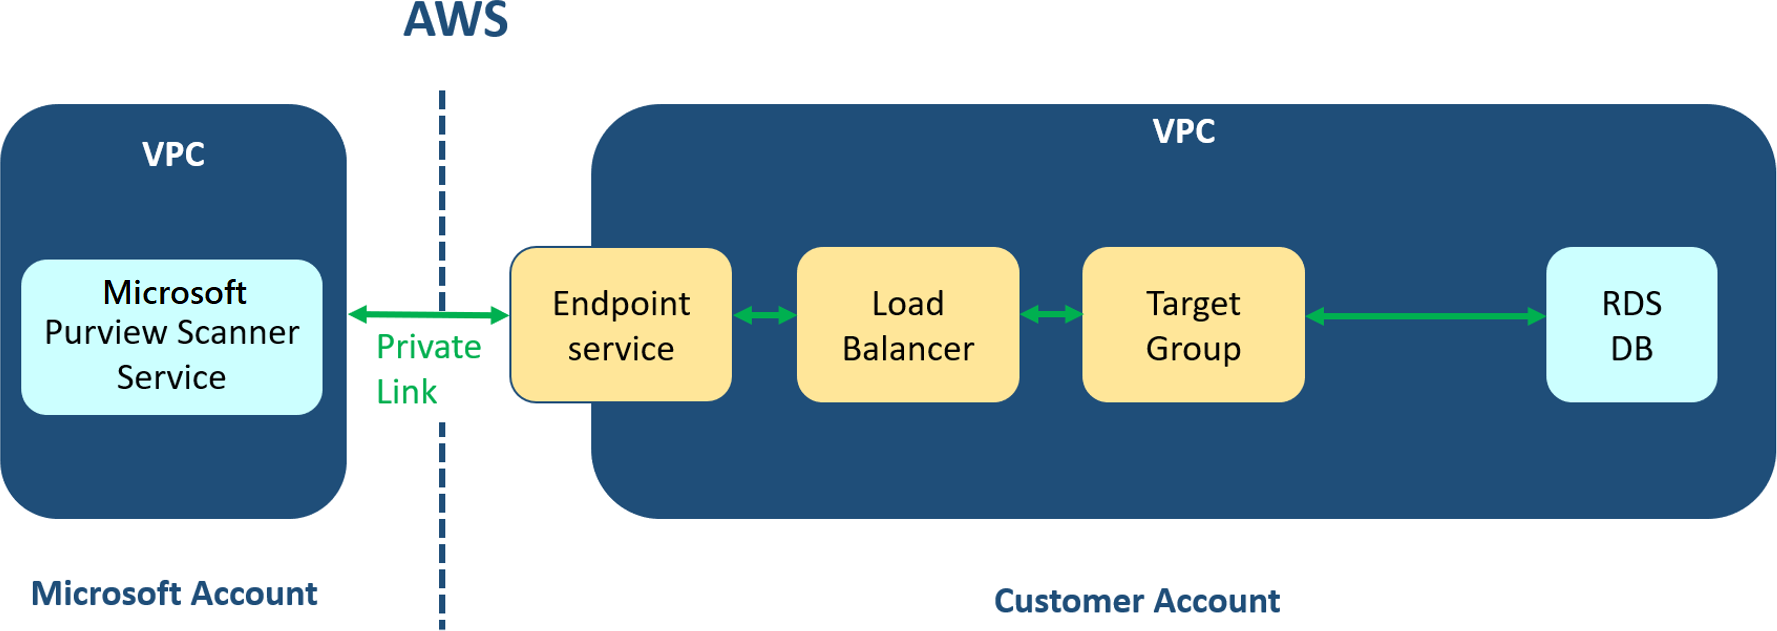 Diagrama do serviço Multicloud Scanning Connectors for Microsoft Purview em uma arquitetura VPC.